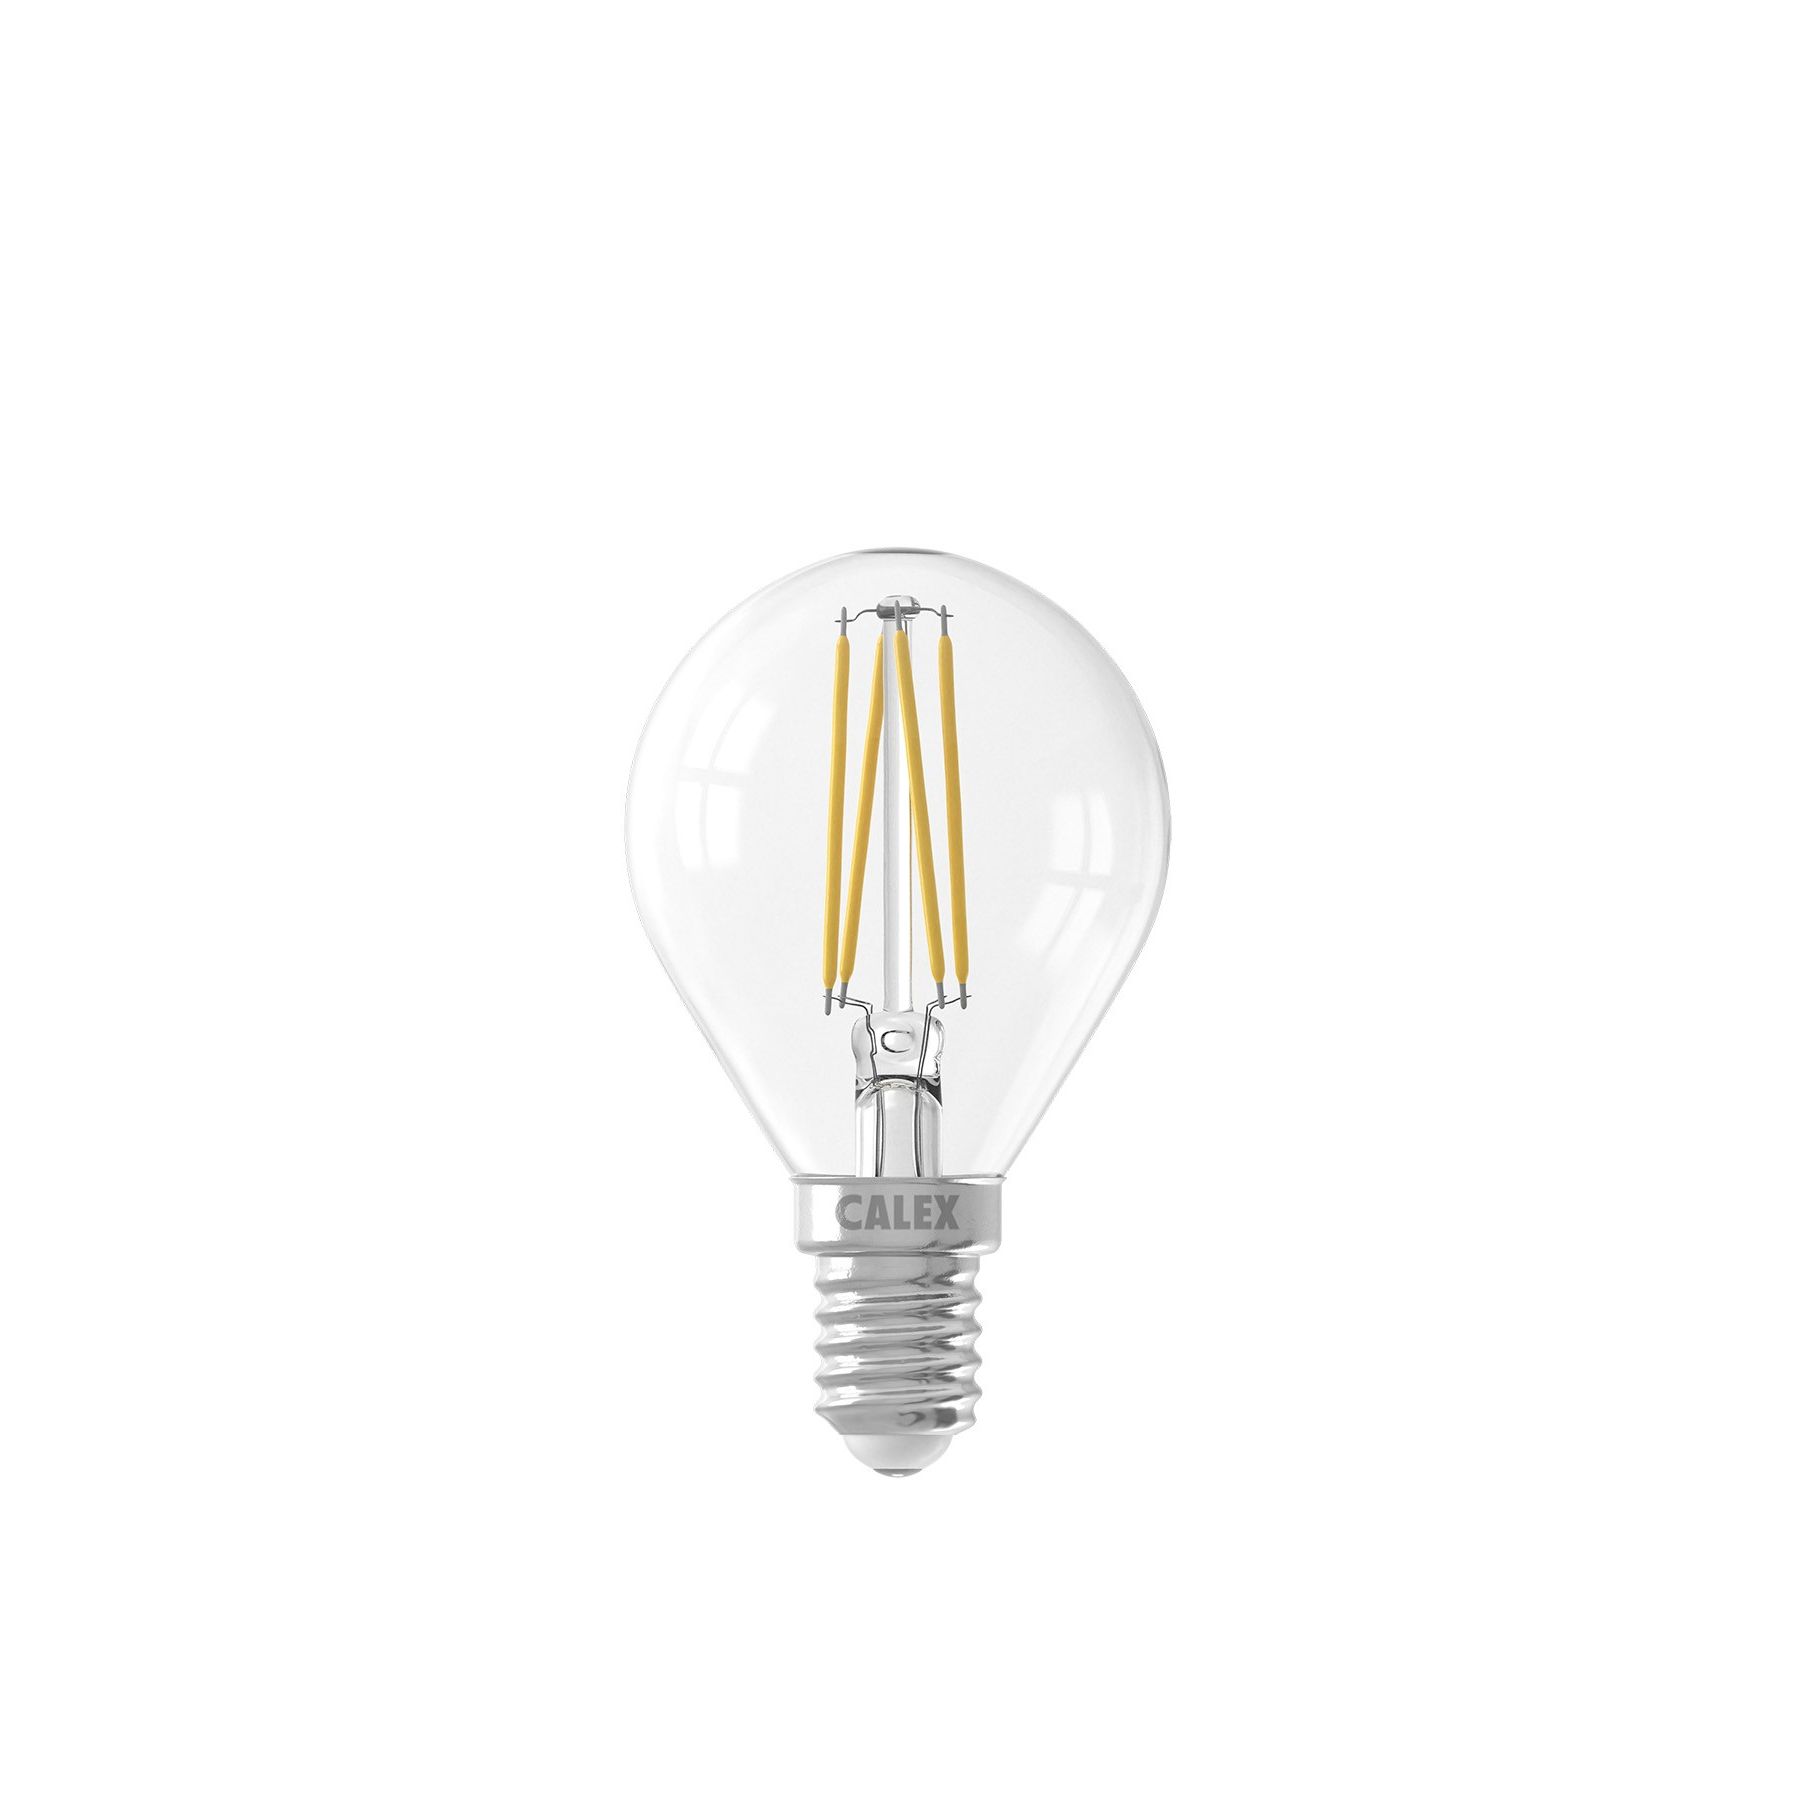 schors kraai vanavond Calex LED lamp - Ø 4,5 x 7,7 cm - E14 - 4W - dimbaar - 2700K - transparant  | Lichtkoning